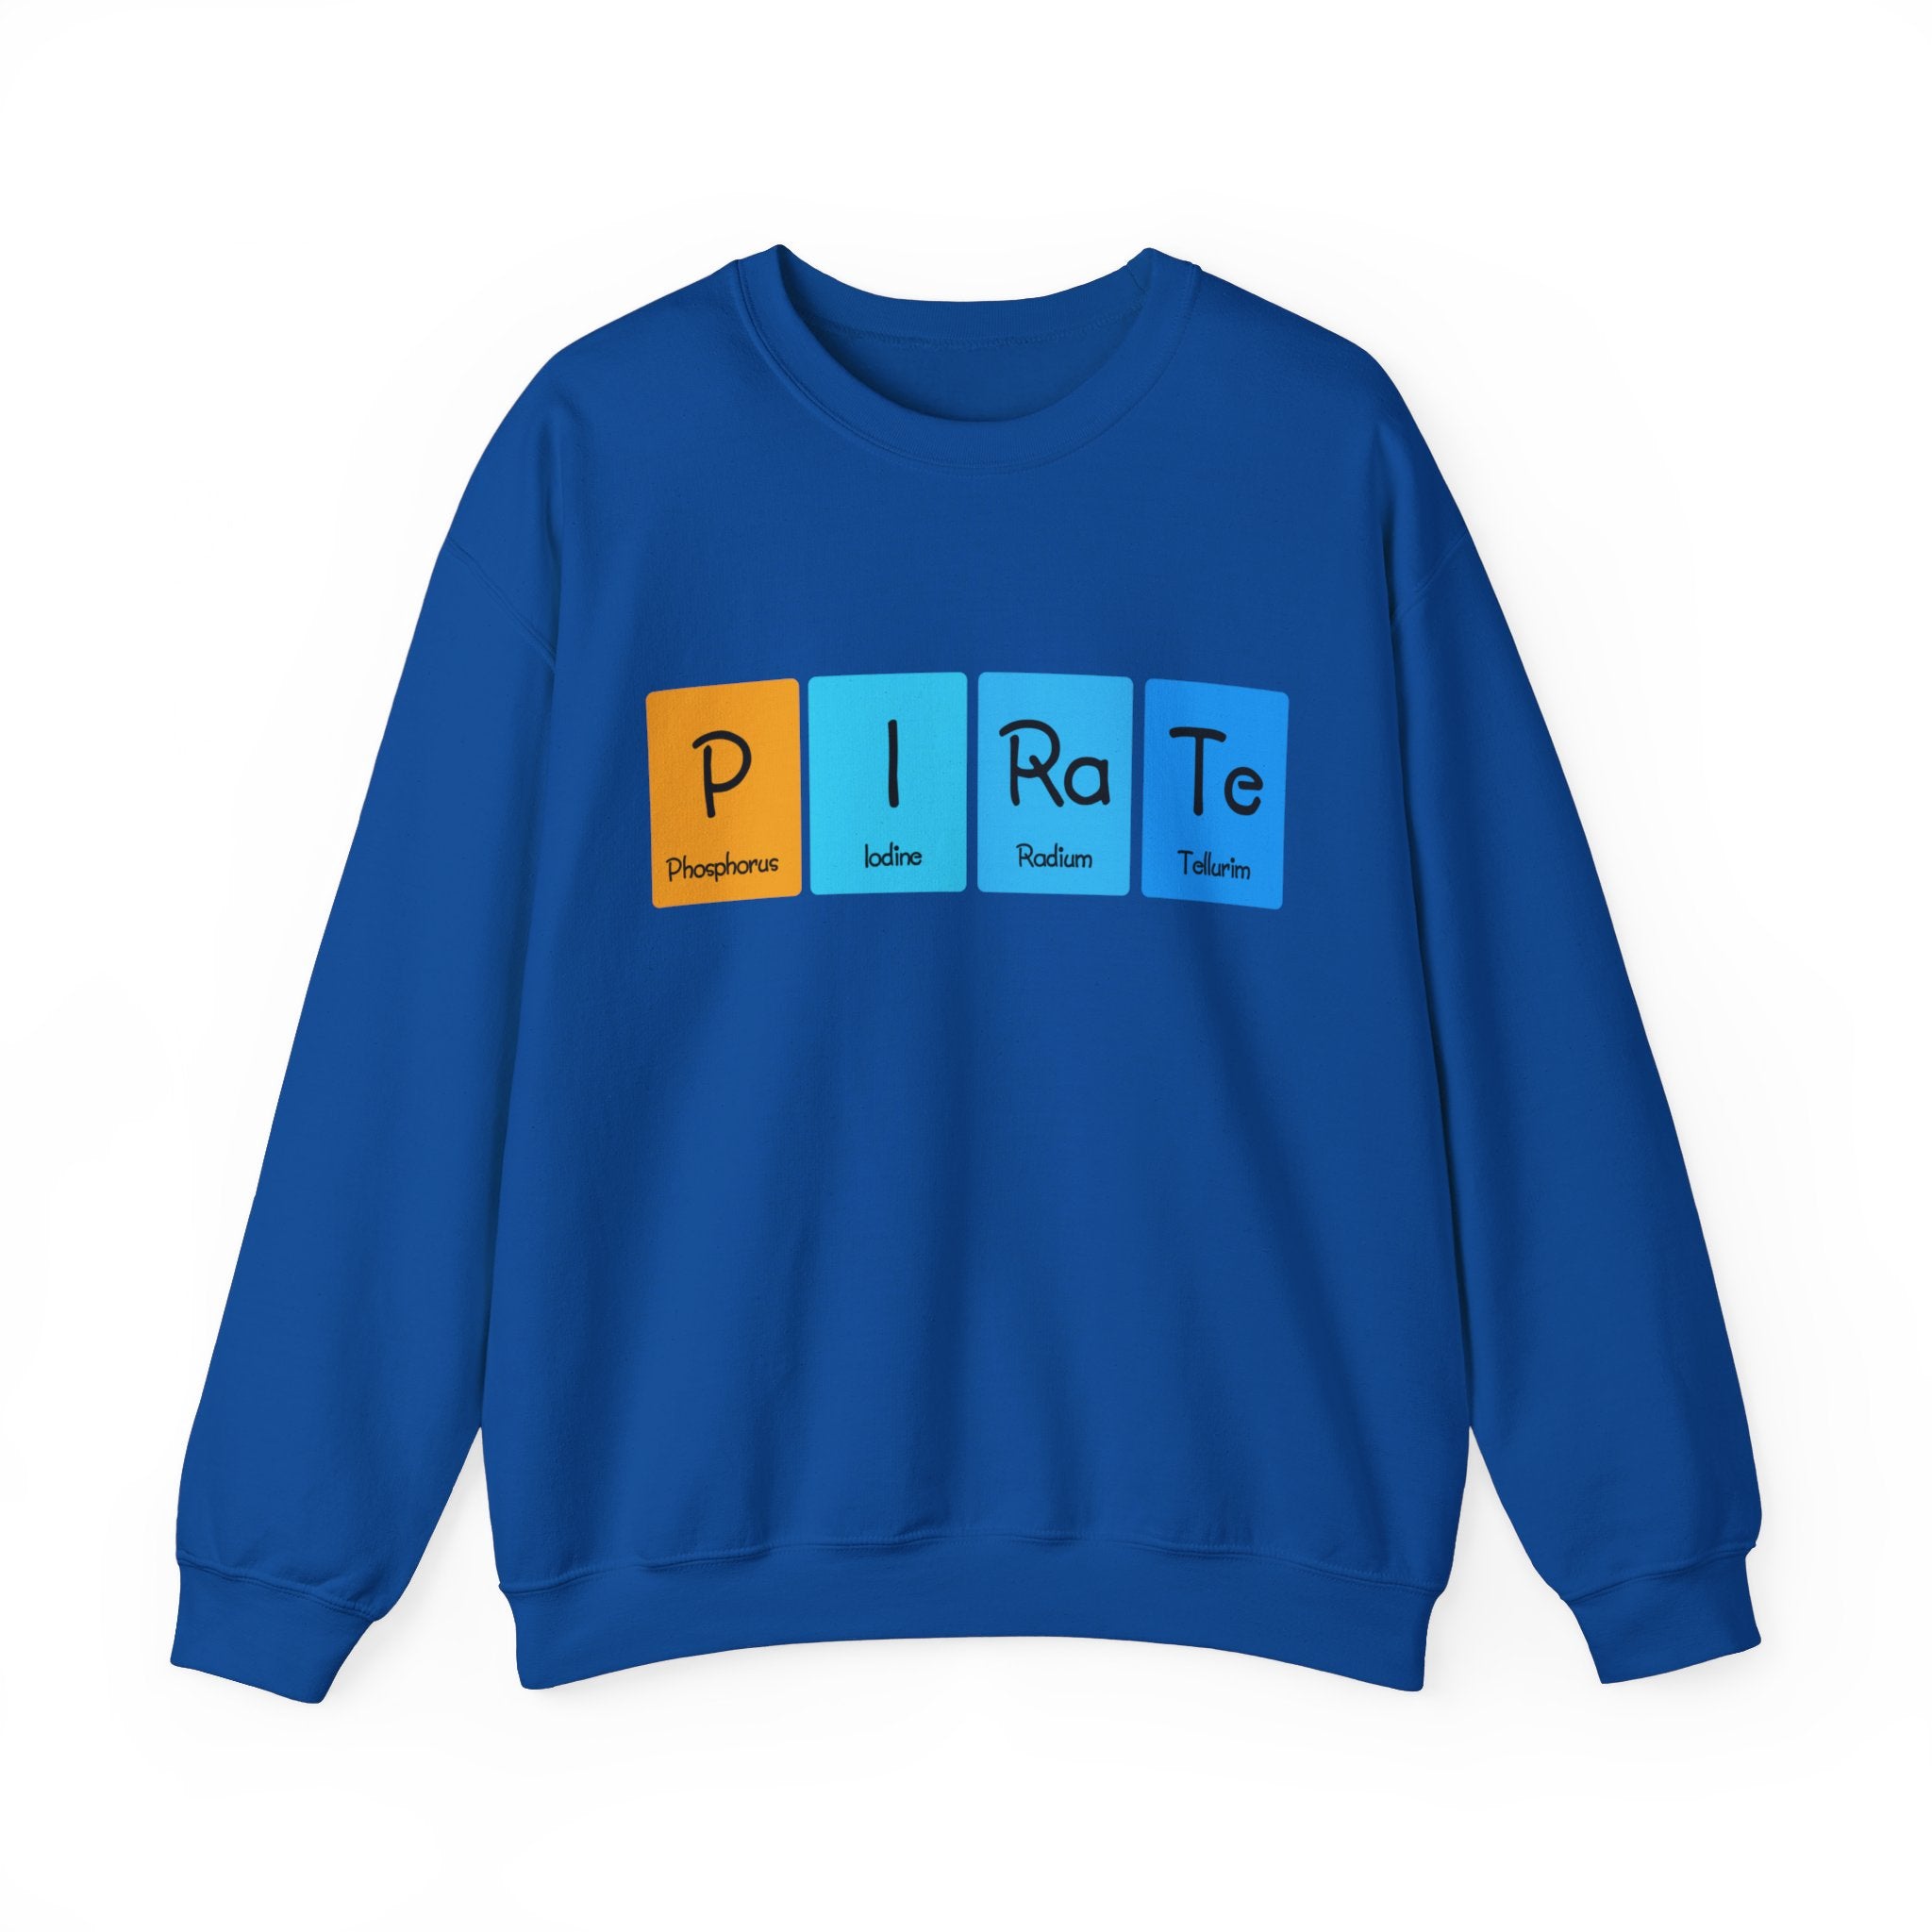 Cozy blue P-I-Ra-Te Sweatshirt displaying "PIRATE" with Phosphorus, Iodine, Radium, and Tellurium in vibrant periodic table blocks—perfect for the colder months.